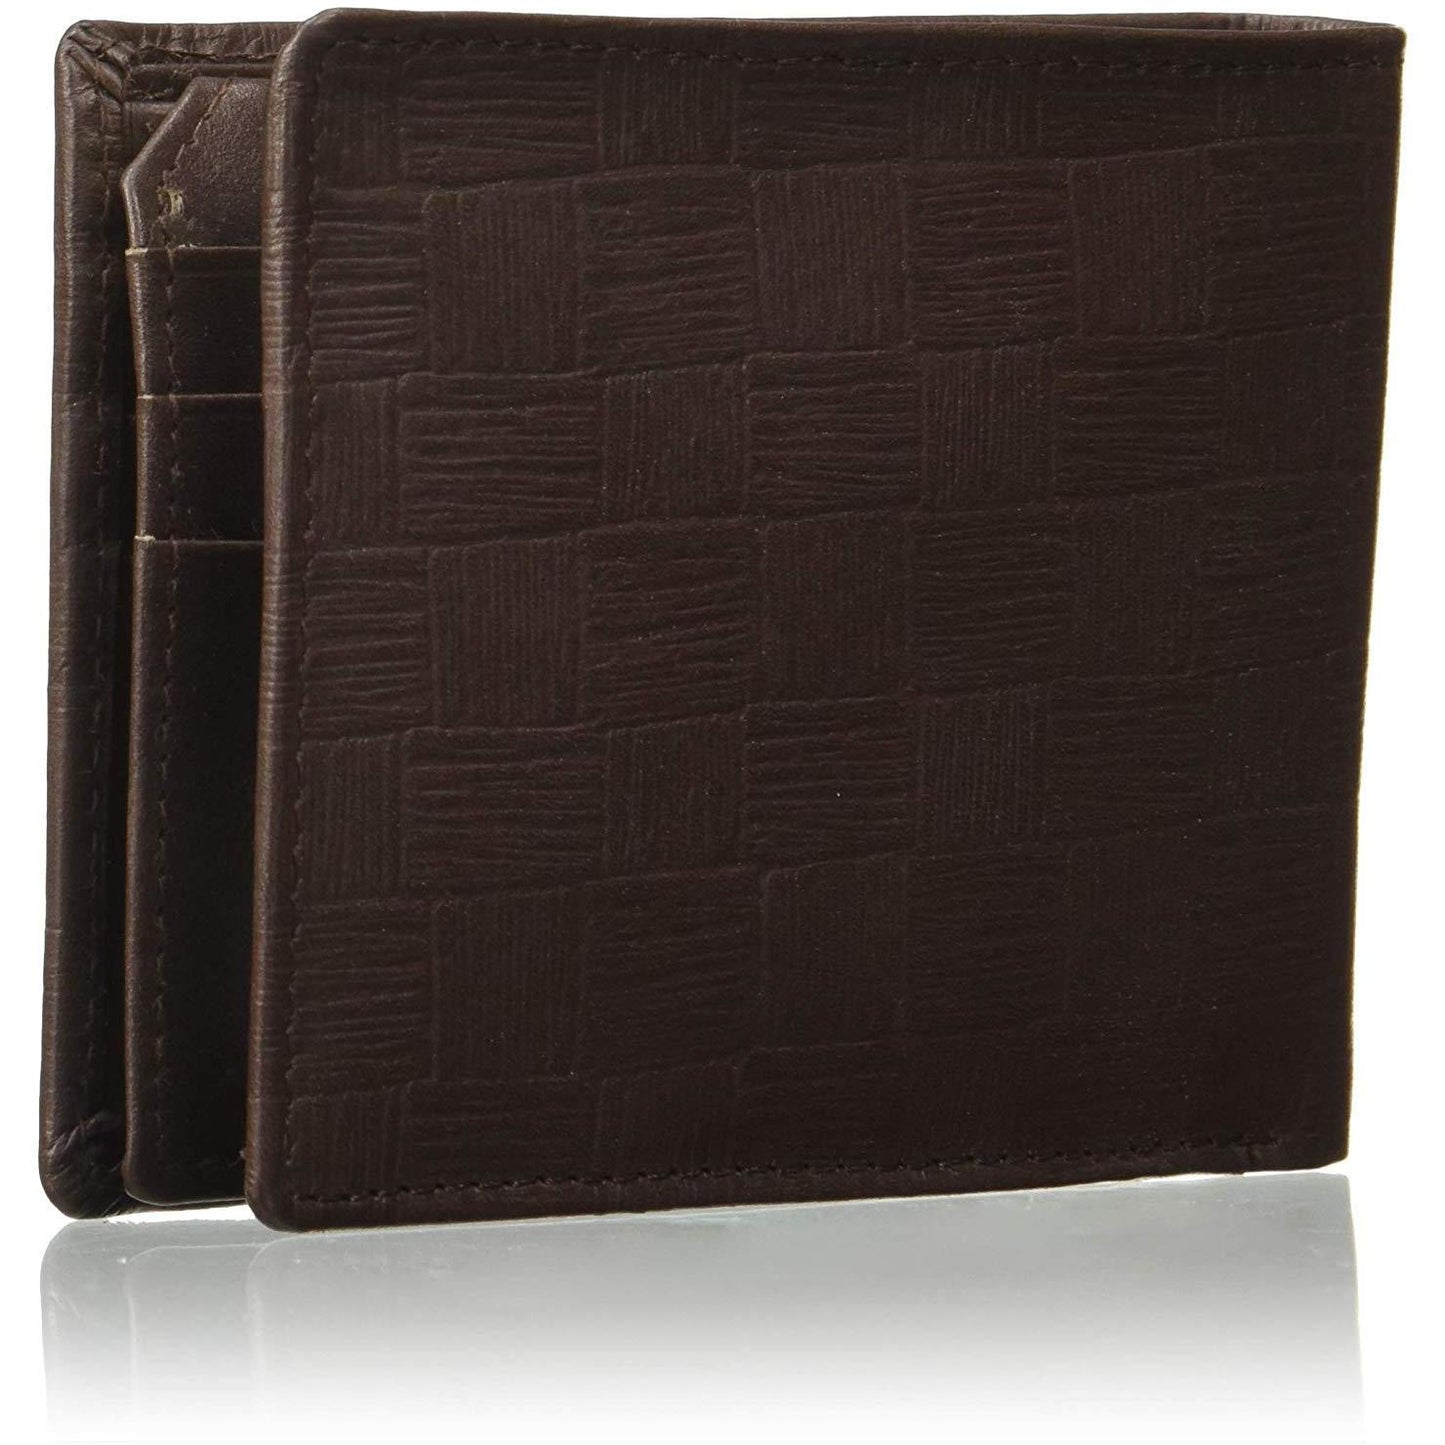 Brown Colour Bi-Fold Italian Leather Slim Wallet ( 6 Card Slot + 2 Hidden Compartment + 1 ID Slot + Coin Pocket + Cash Compartment )